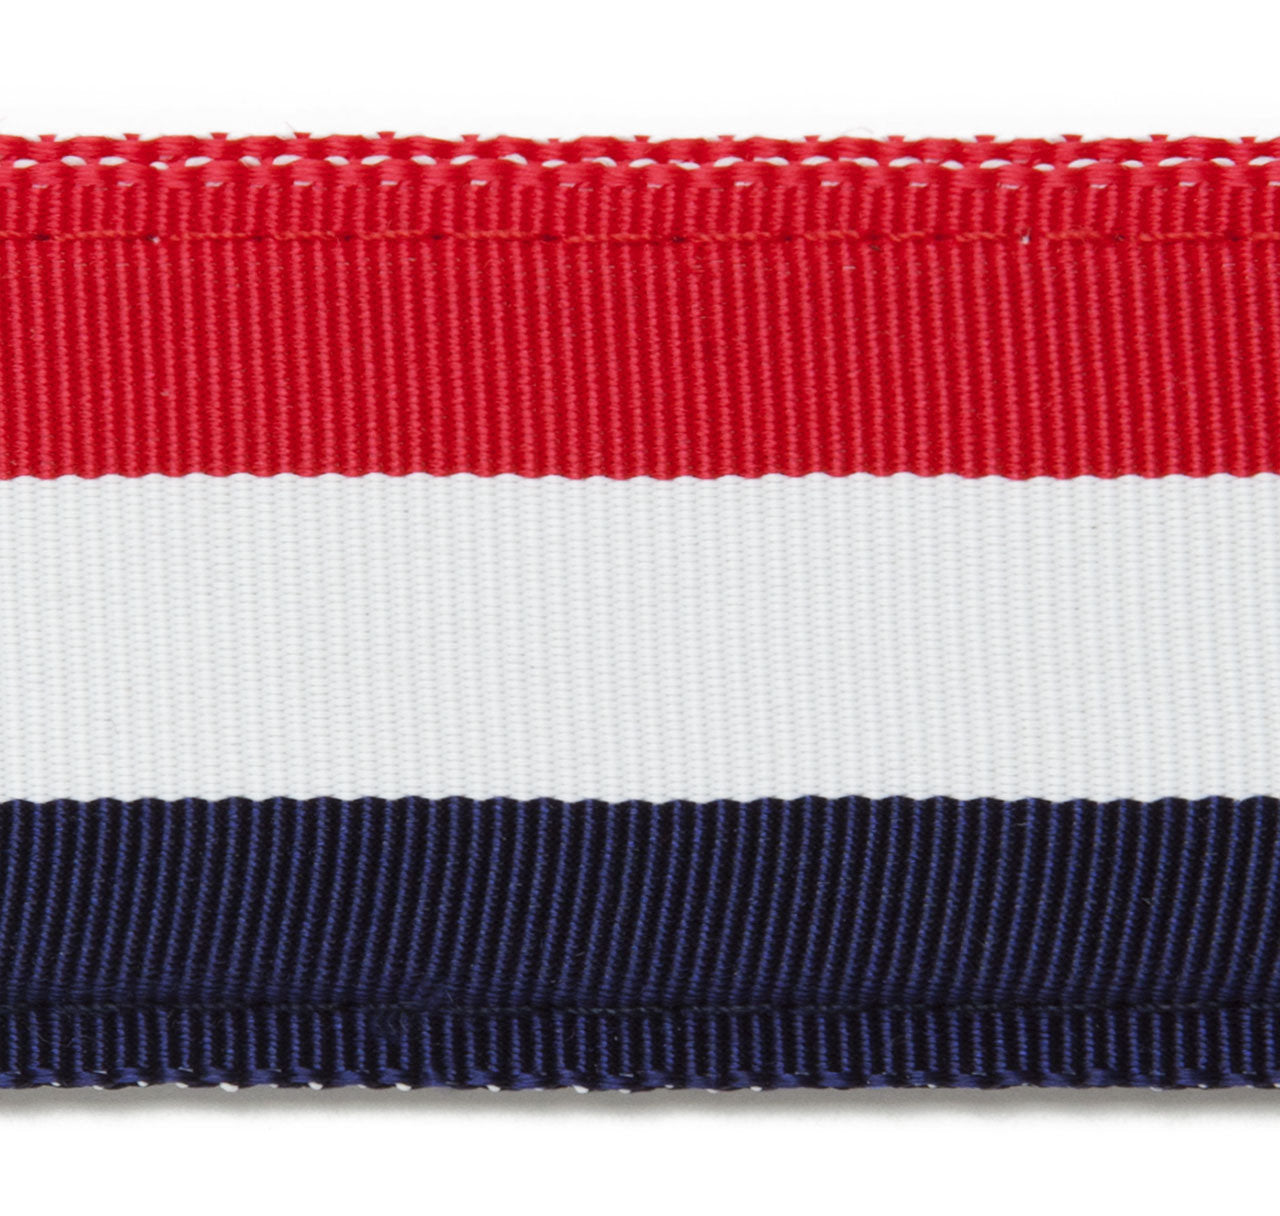 Sir Jack's Red, White, and Blue Stripe Ribbon Belt